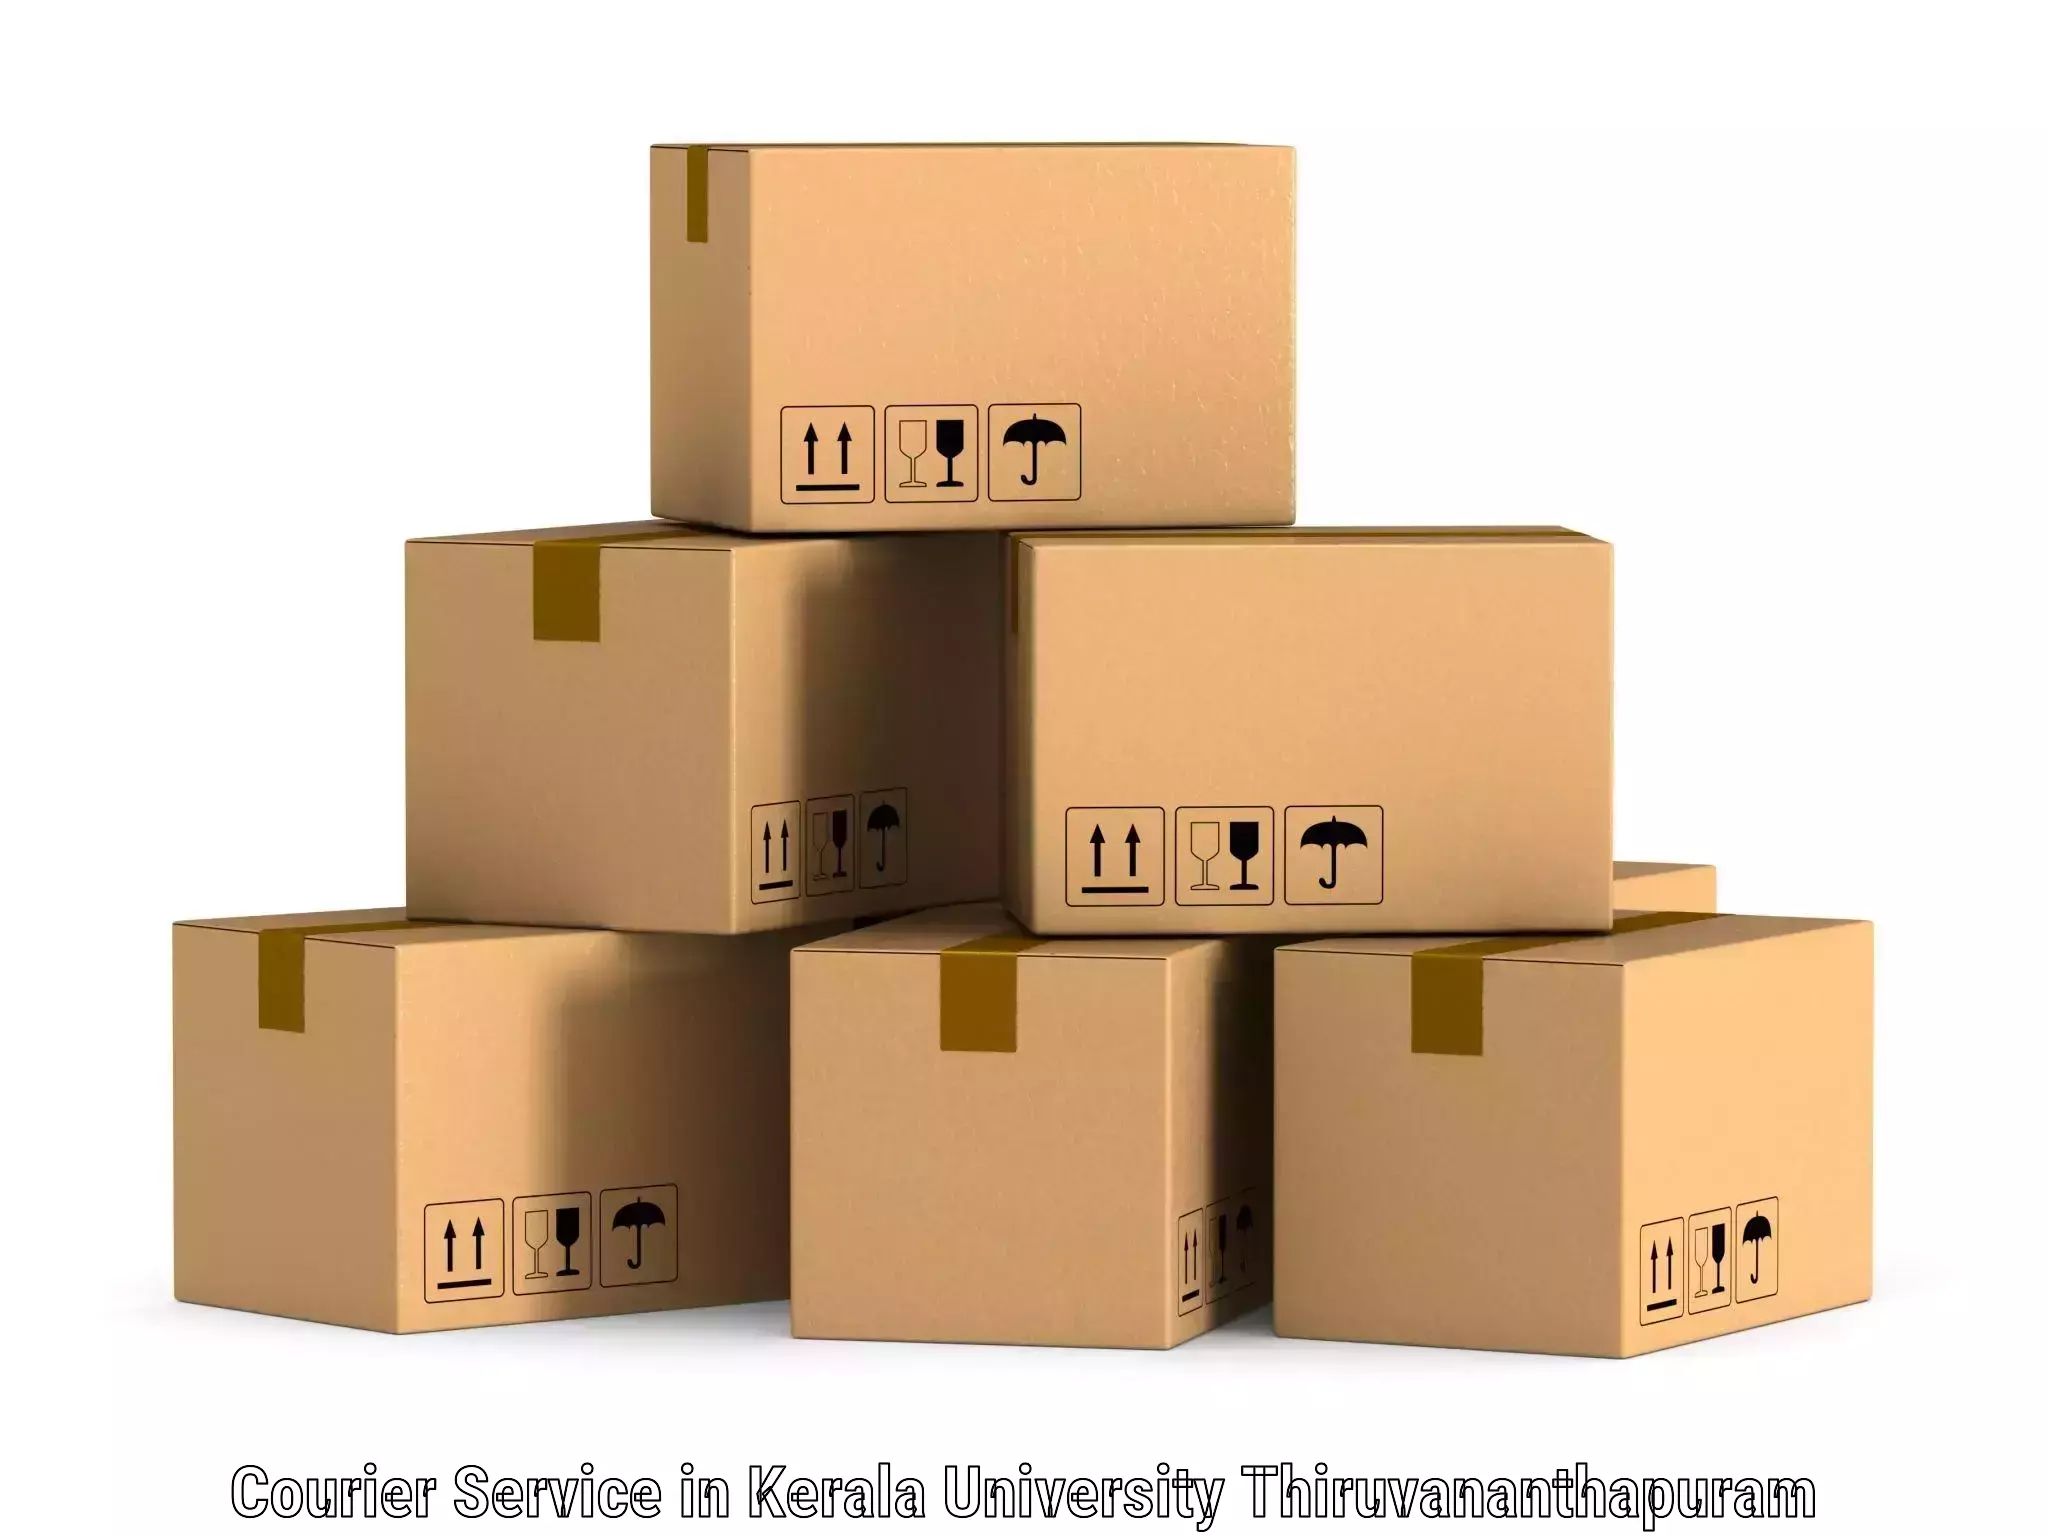 Next-day delivery options in Kerala University Thiruvananthapuram